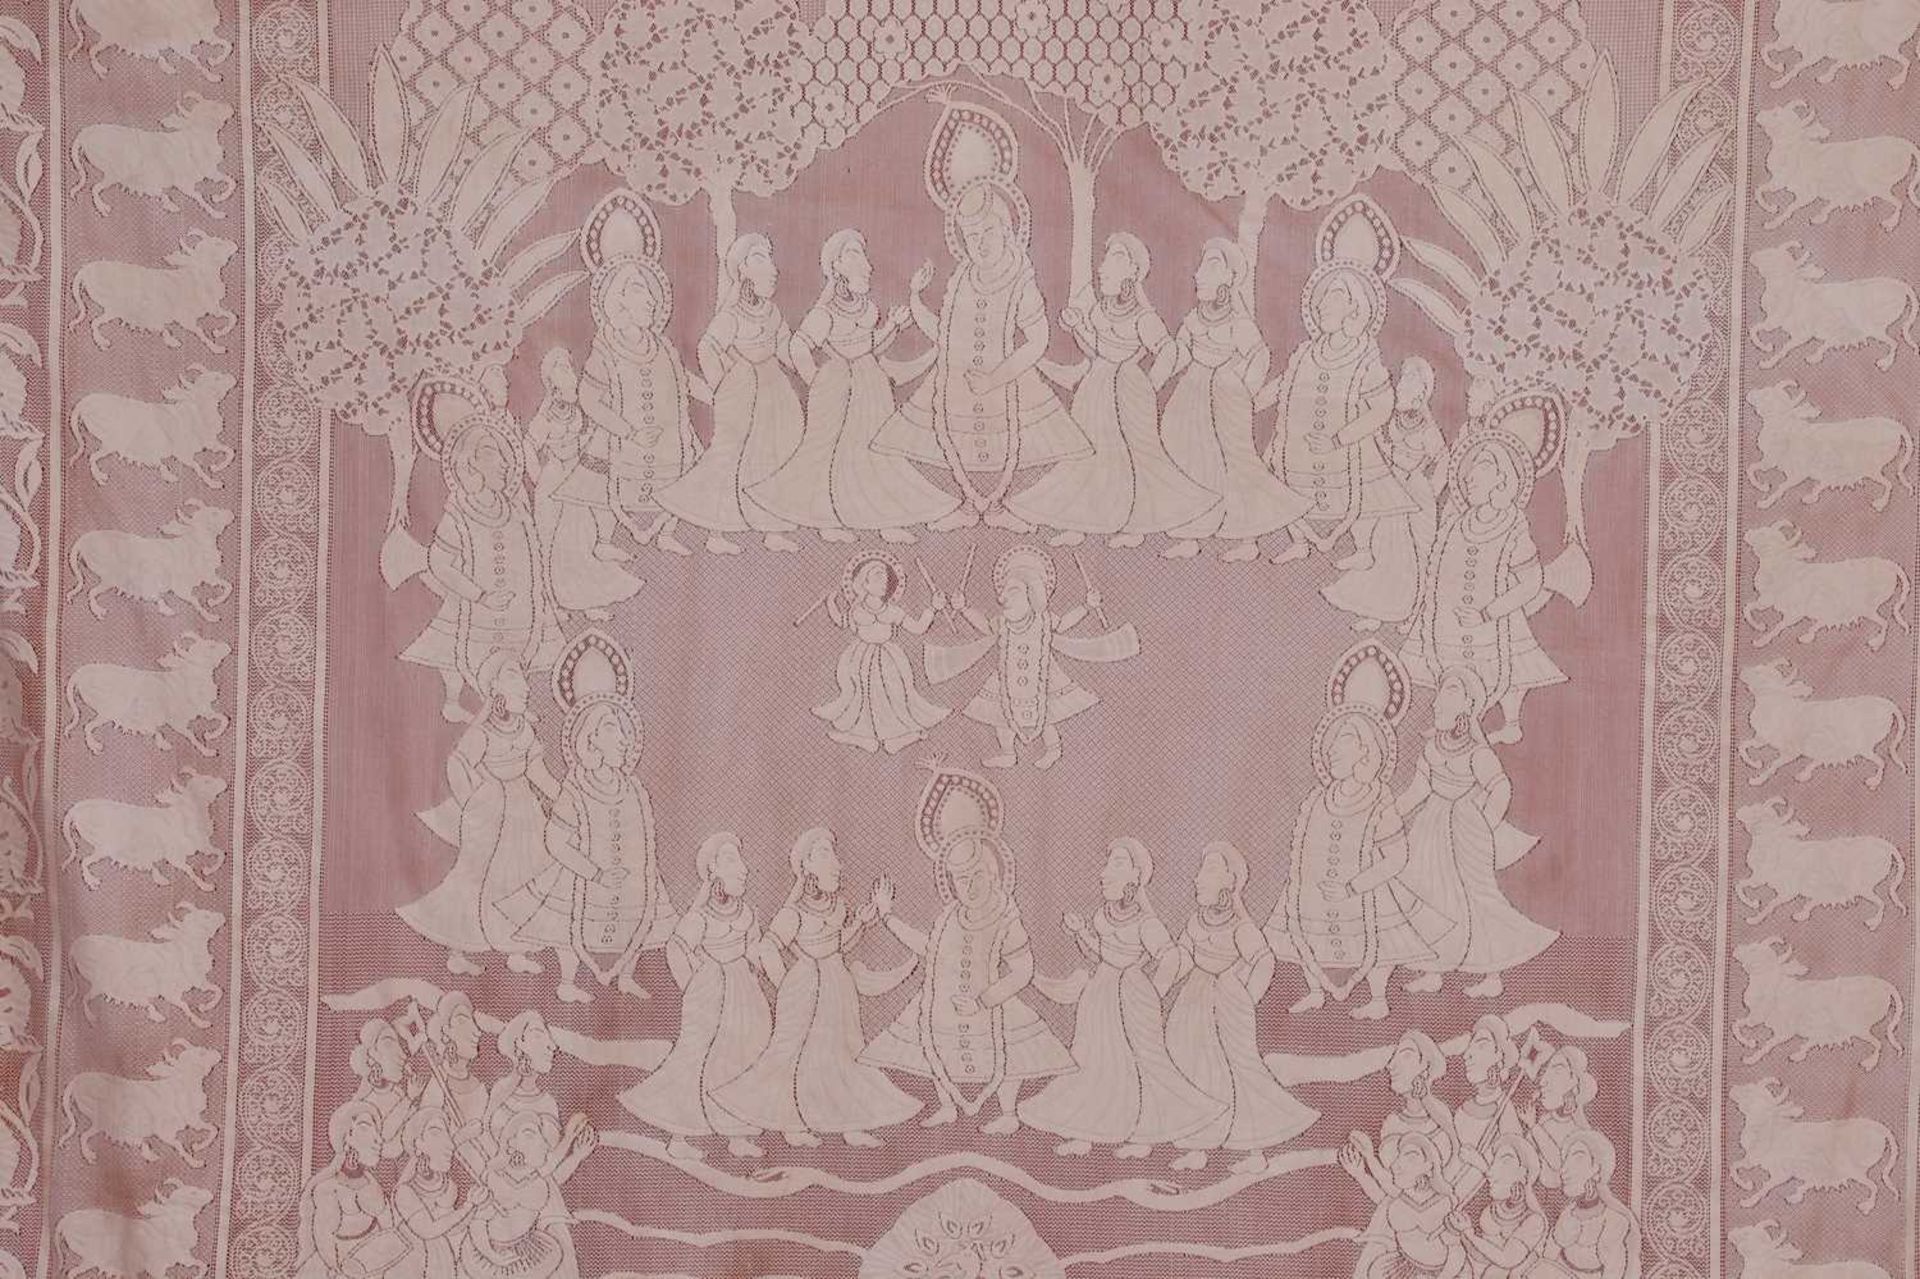 A cotton lace pichhavai or pichwai - Image 3 of 5